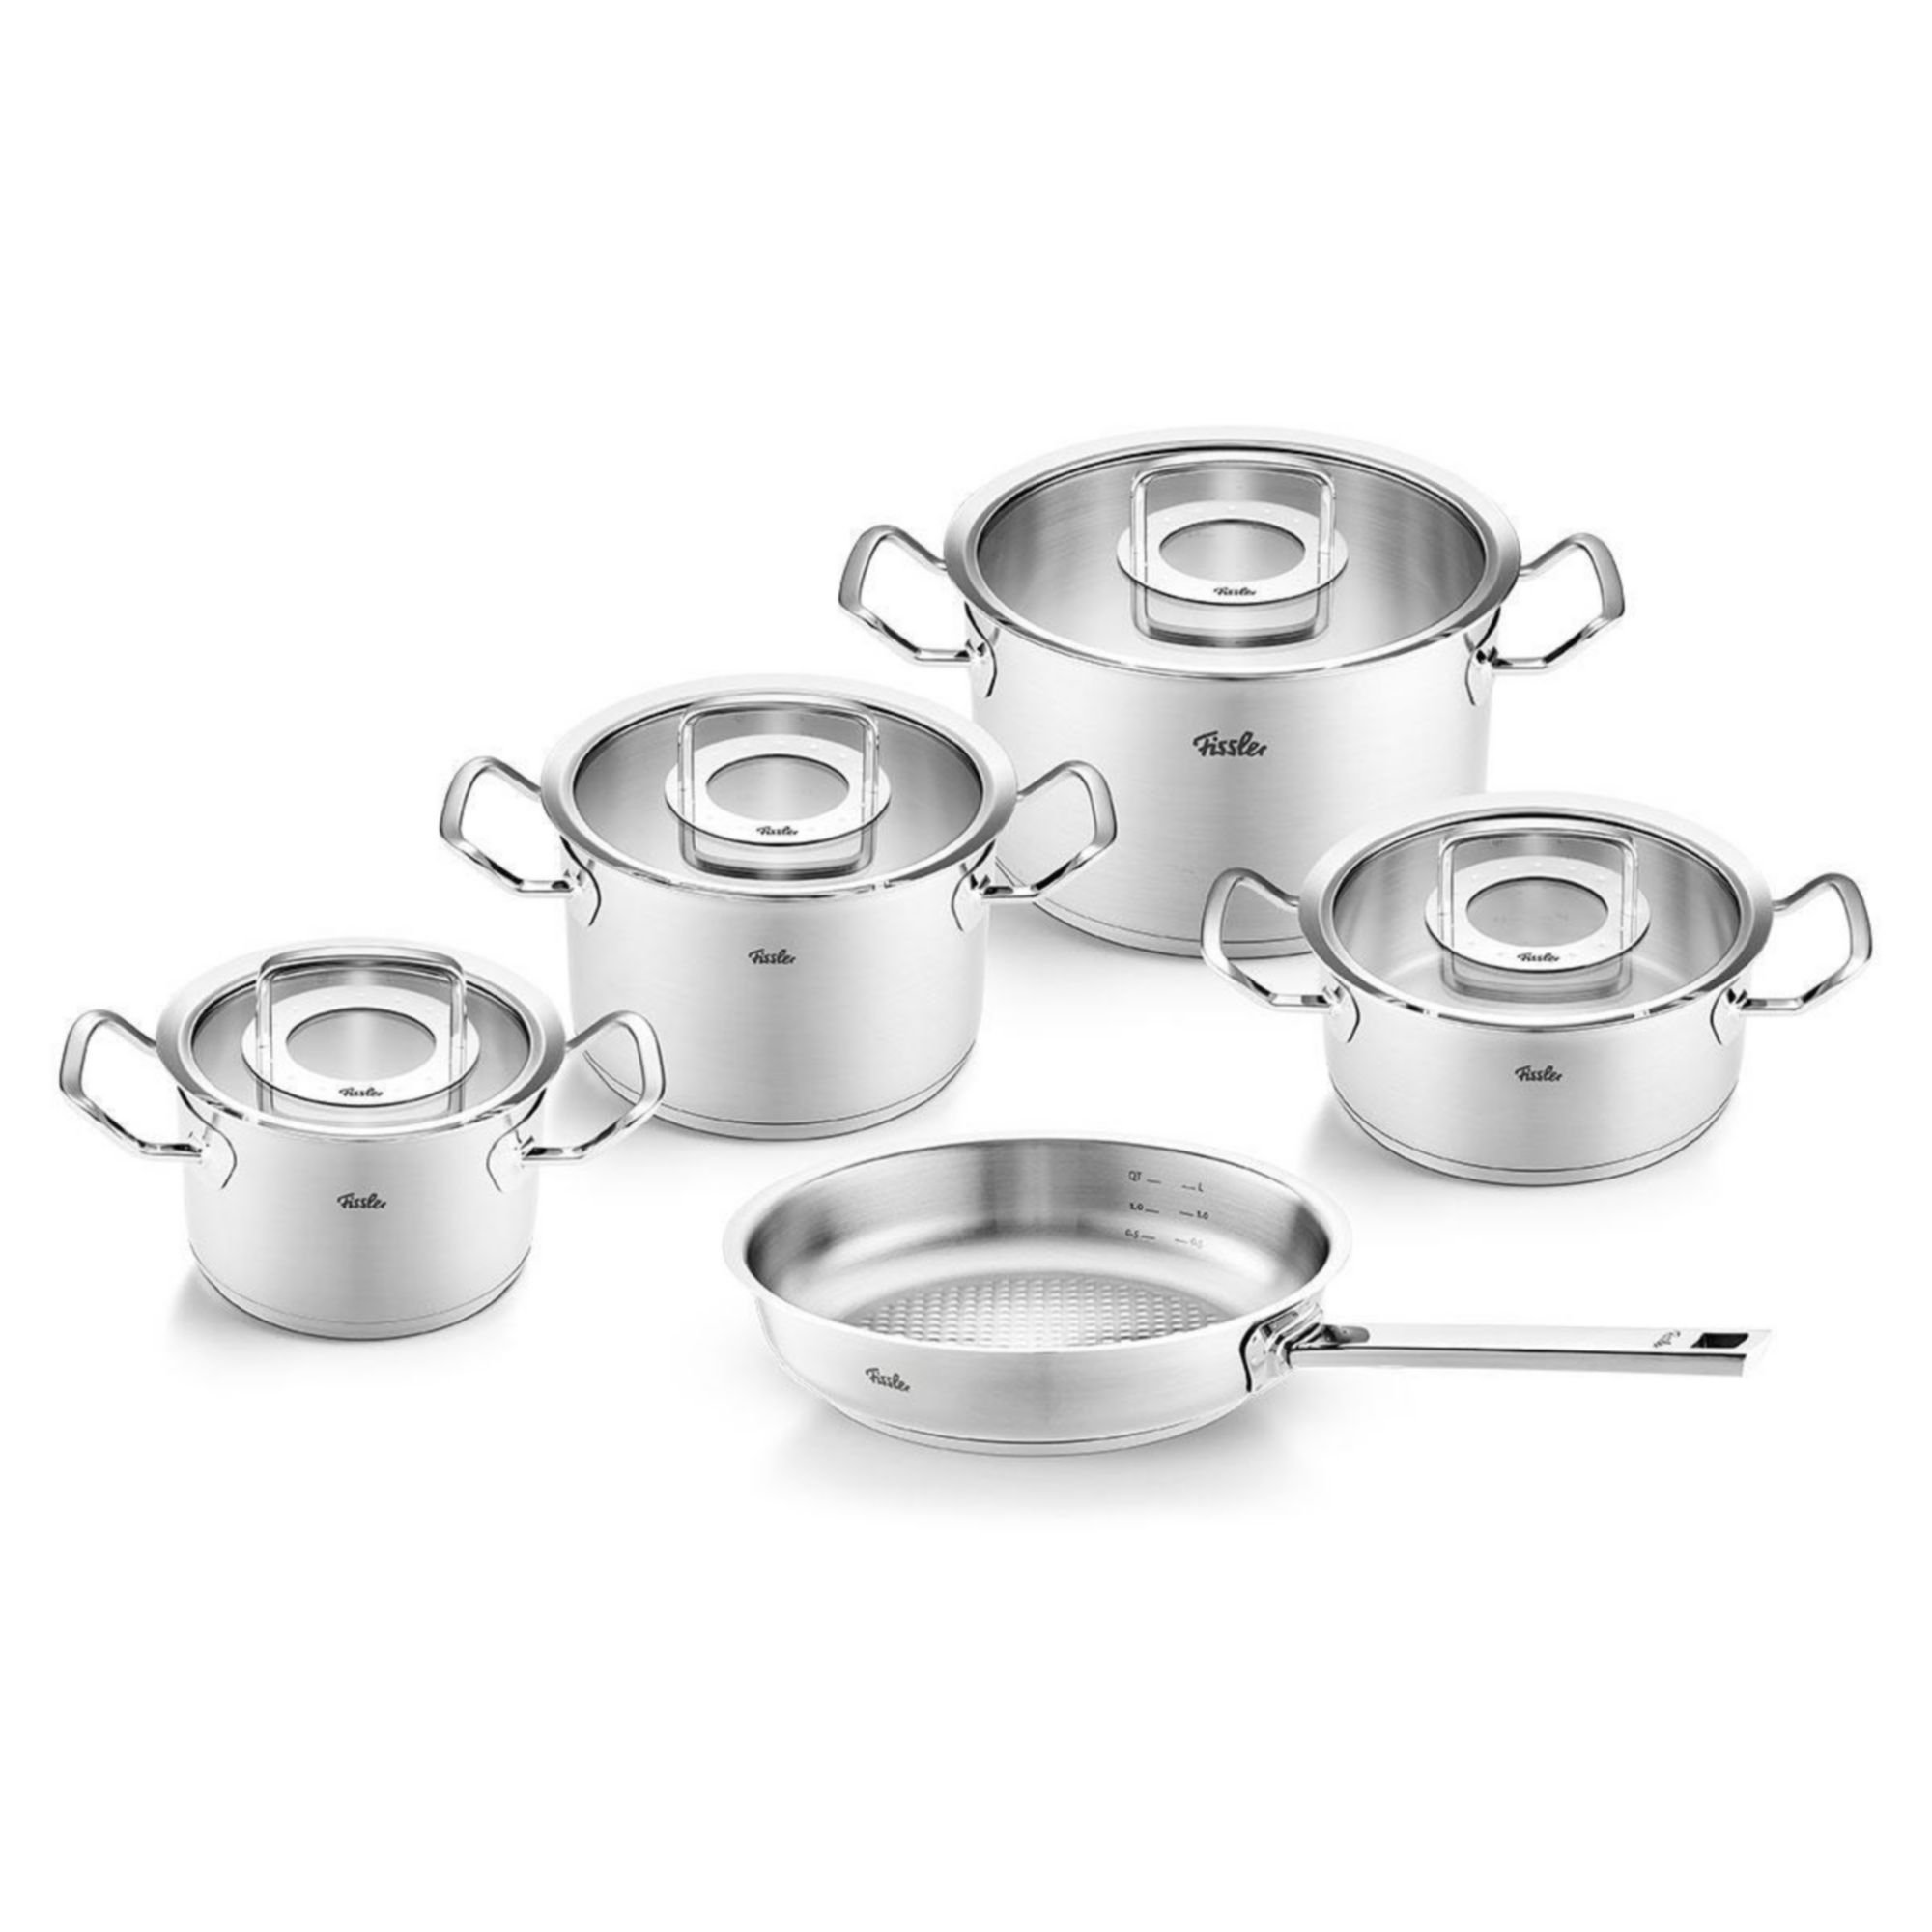 Fissler Original-Profi Collection® Stainless Steel Cookware Set